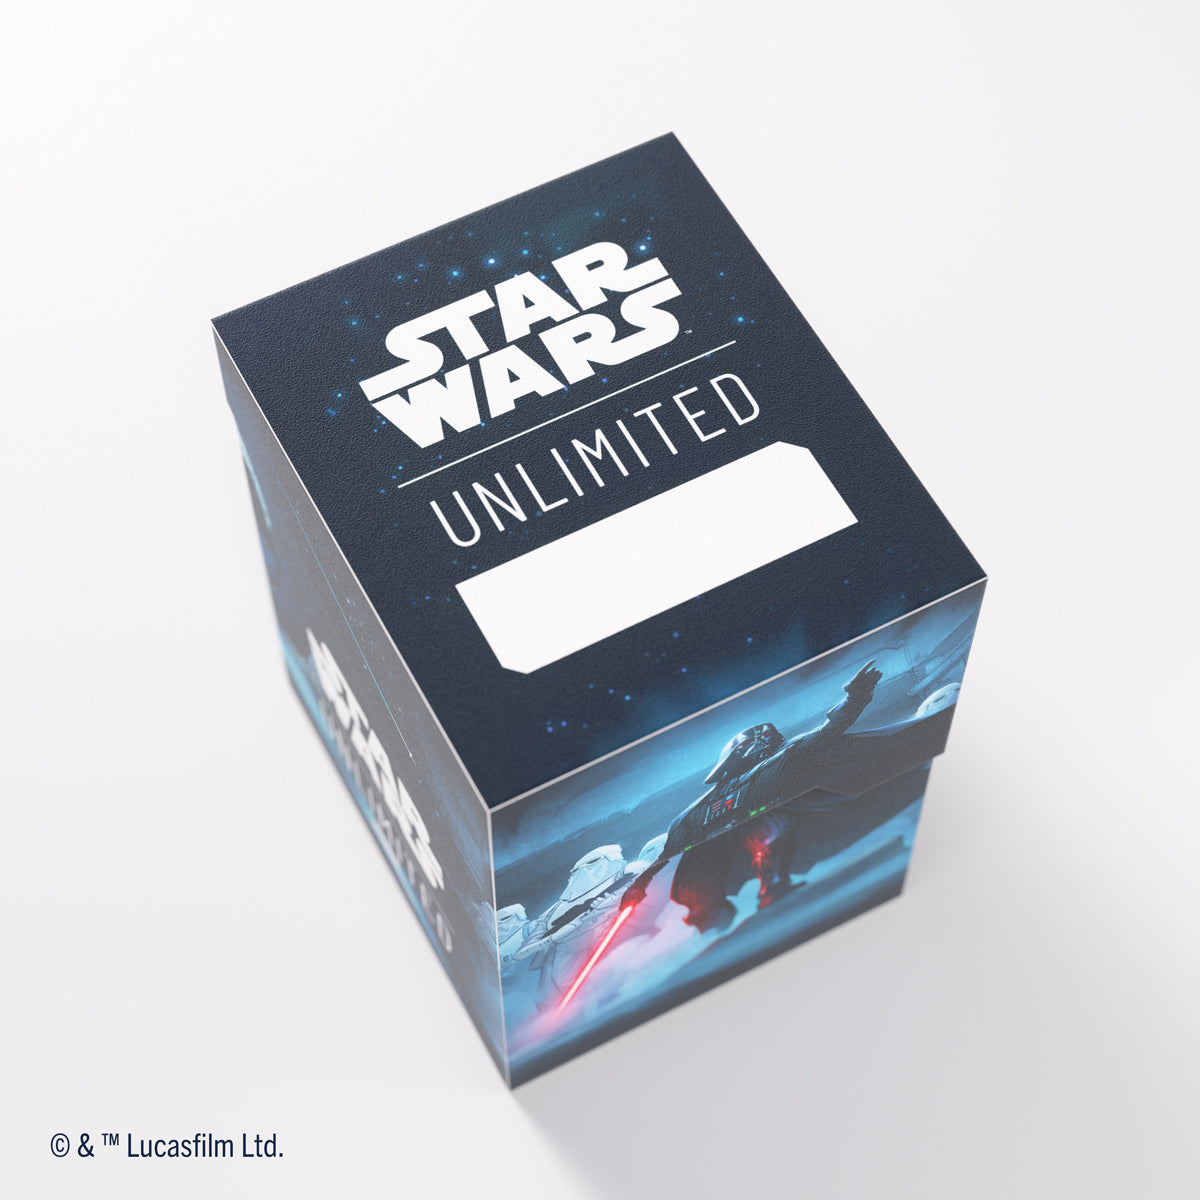 Gamegenic Star Wars: Unlimited Soft Crate Deck Box - Darth Vader